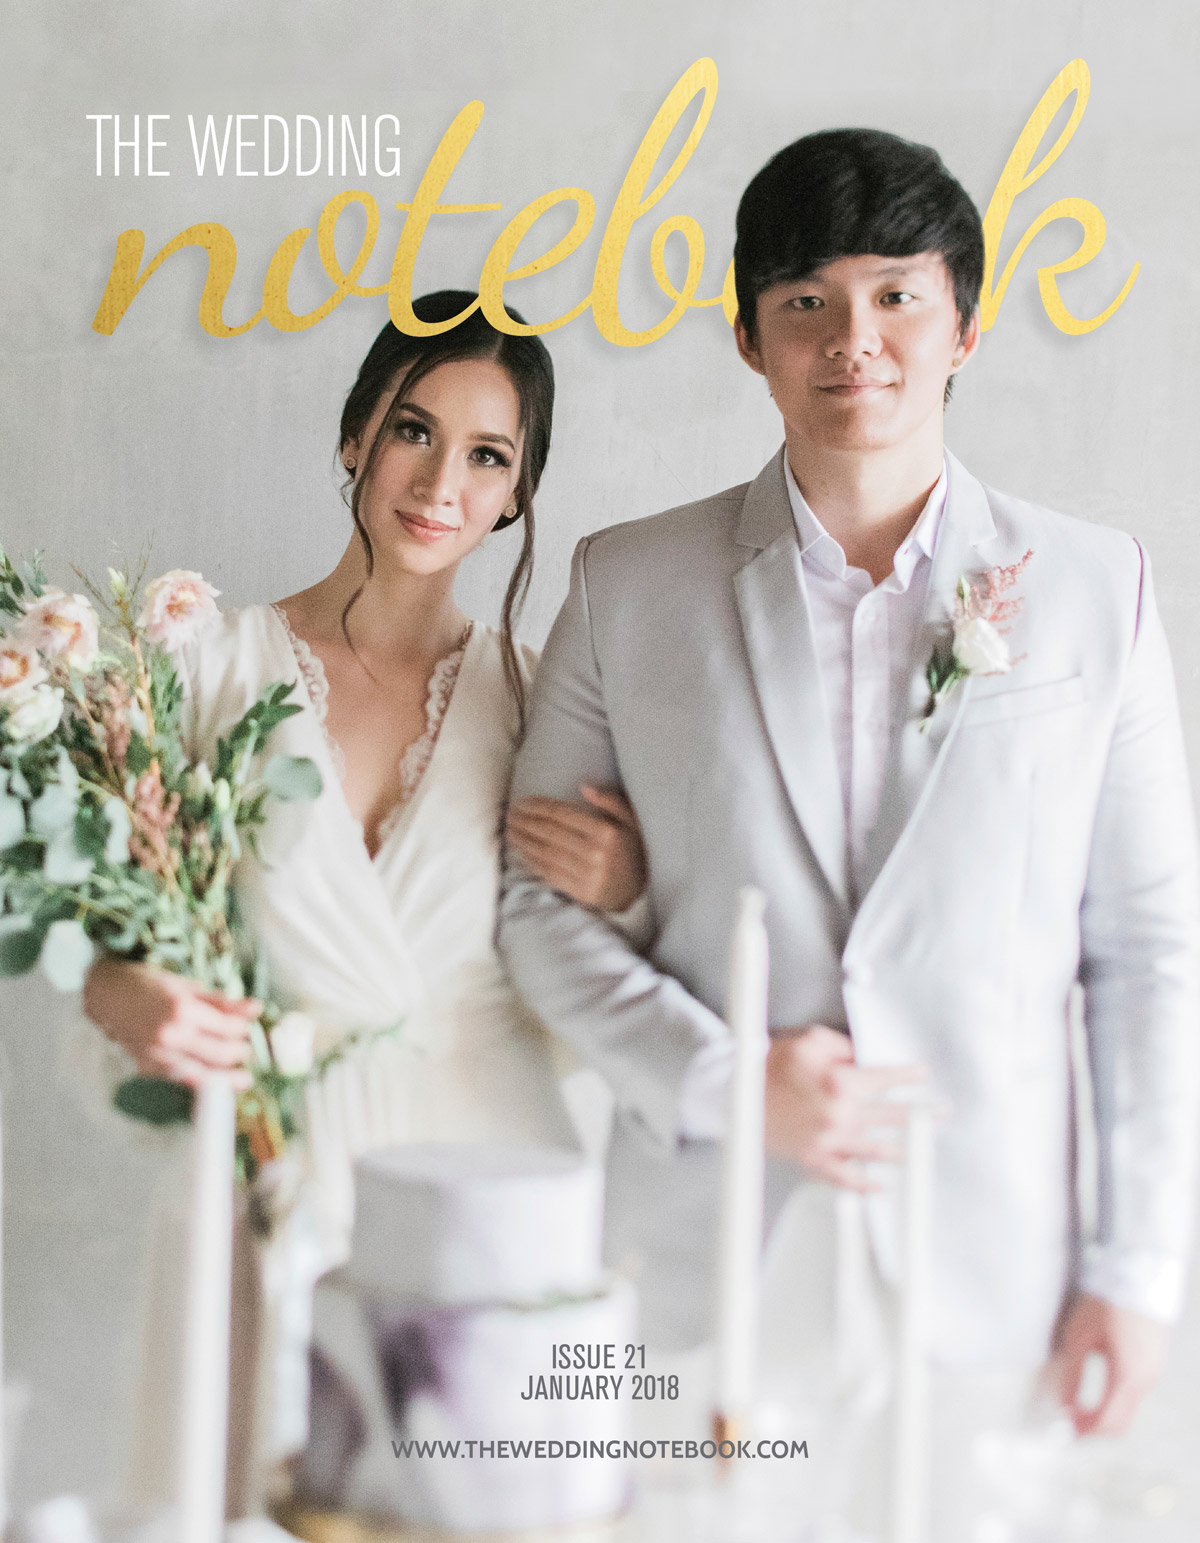 The Wedding Notebook magazine